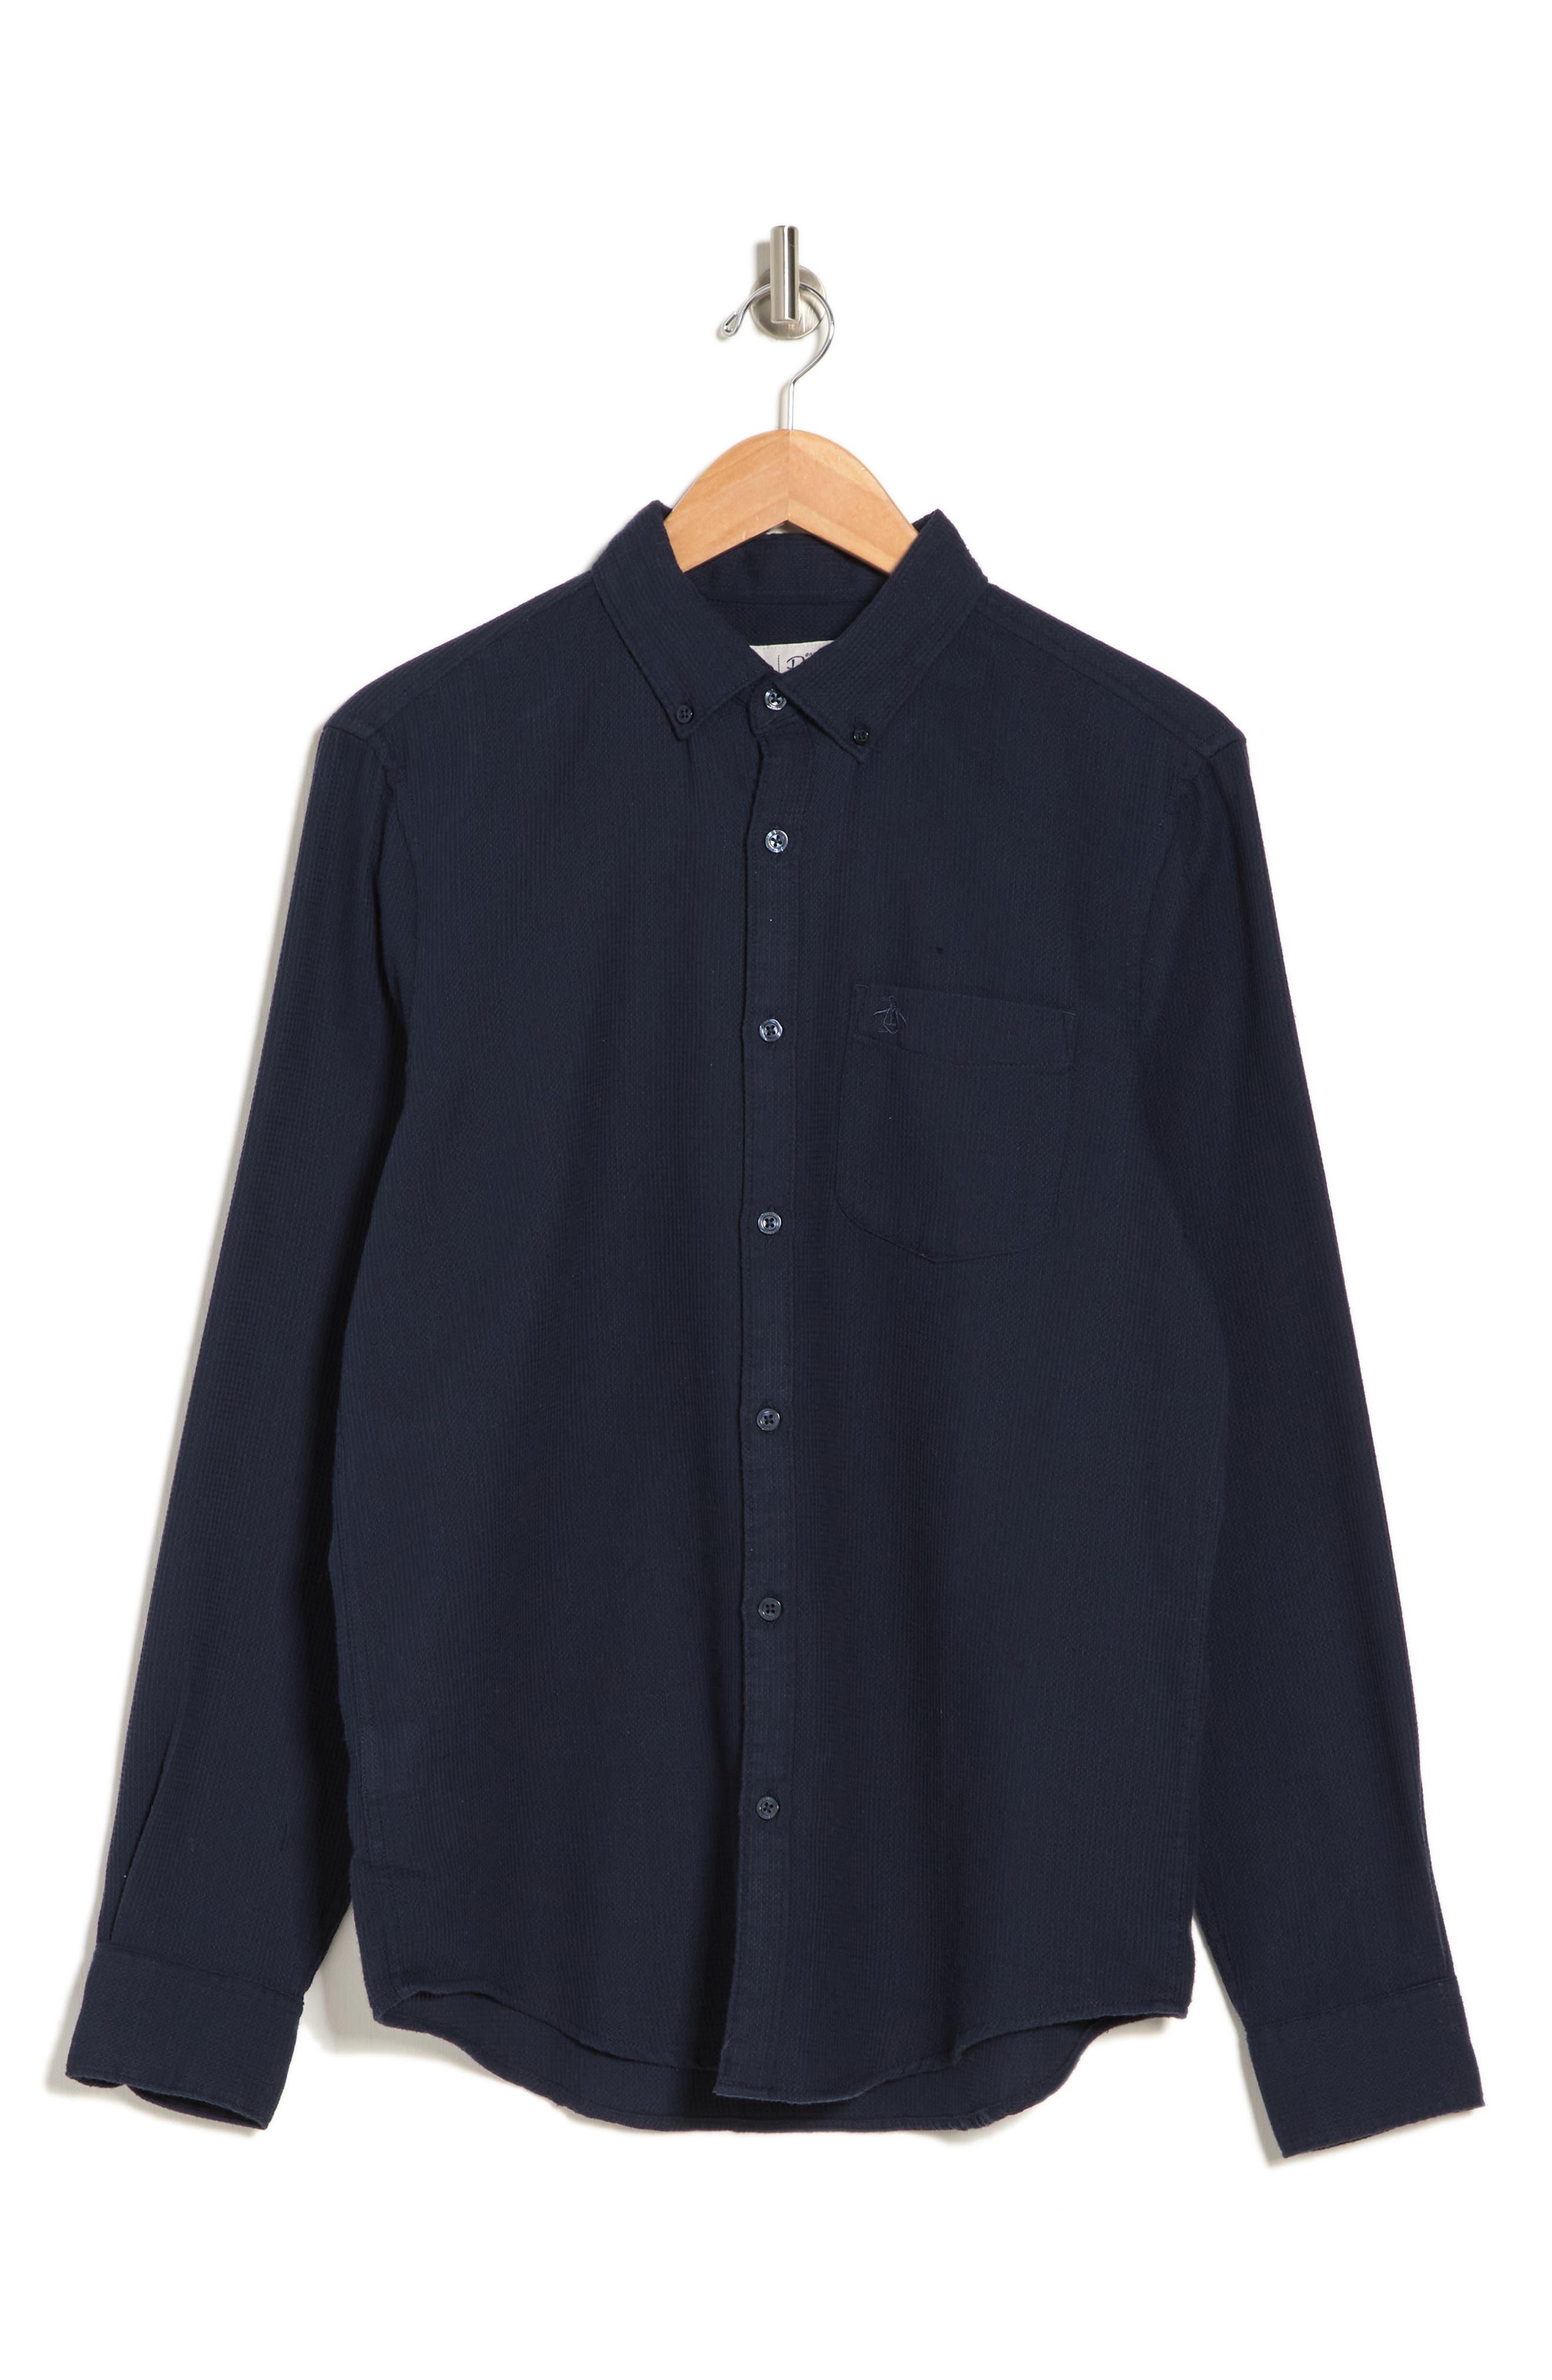 Original Penguin Men's Waffle Weave Shirt in Faded Denim Blue, Size 2XL, Cotton/Polyester